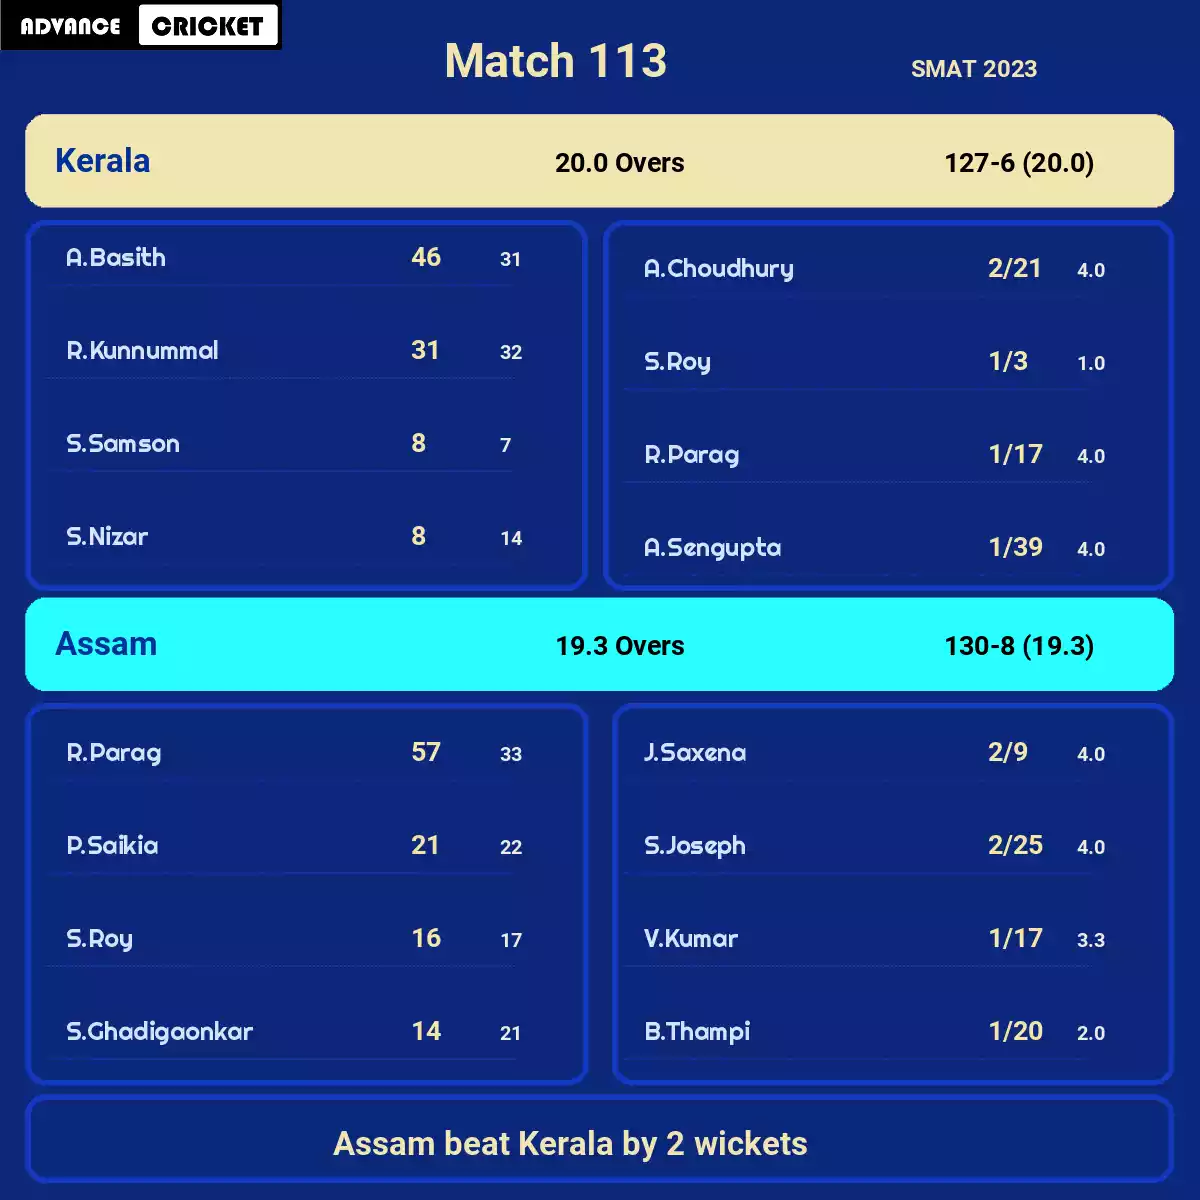 ASM vs KER Match 113 SMAT 2023